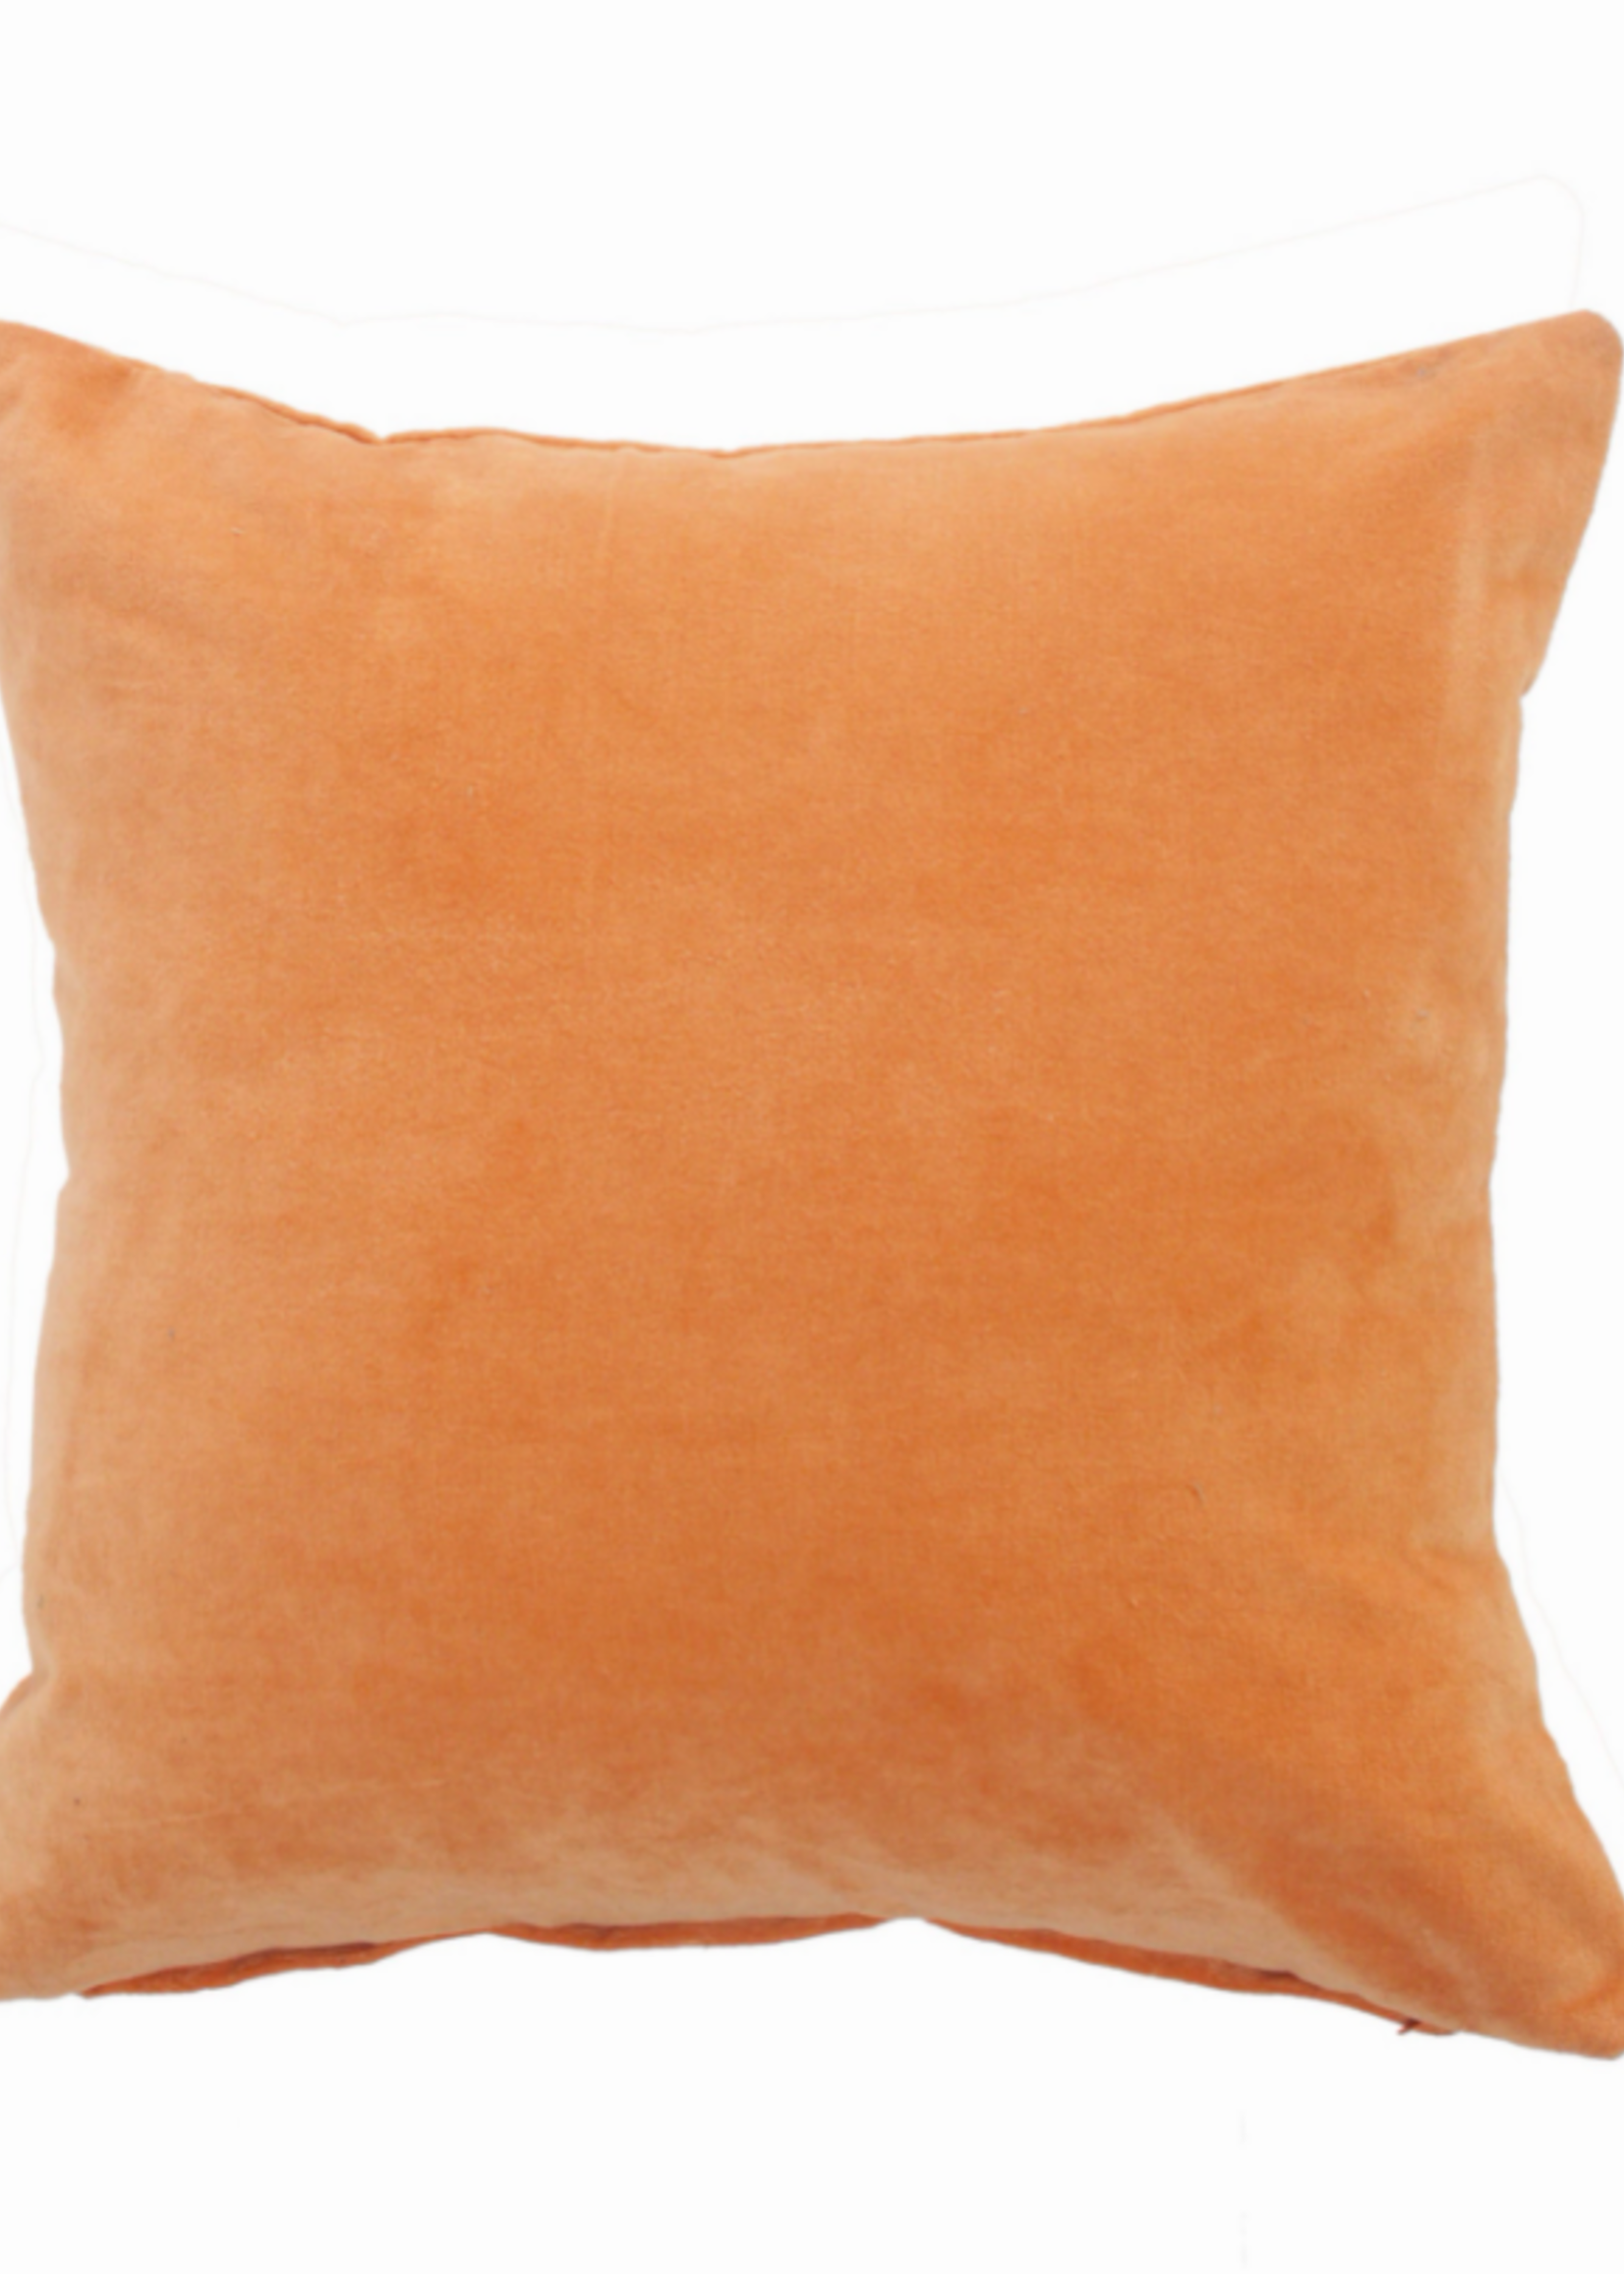 Solid Peach Velveteen Cotton Throw Pillow